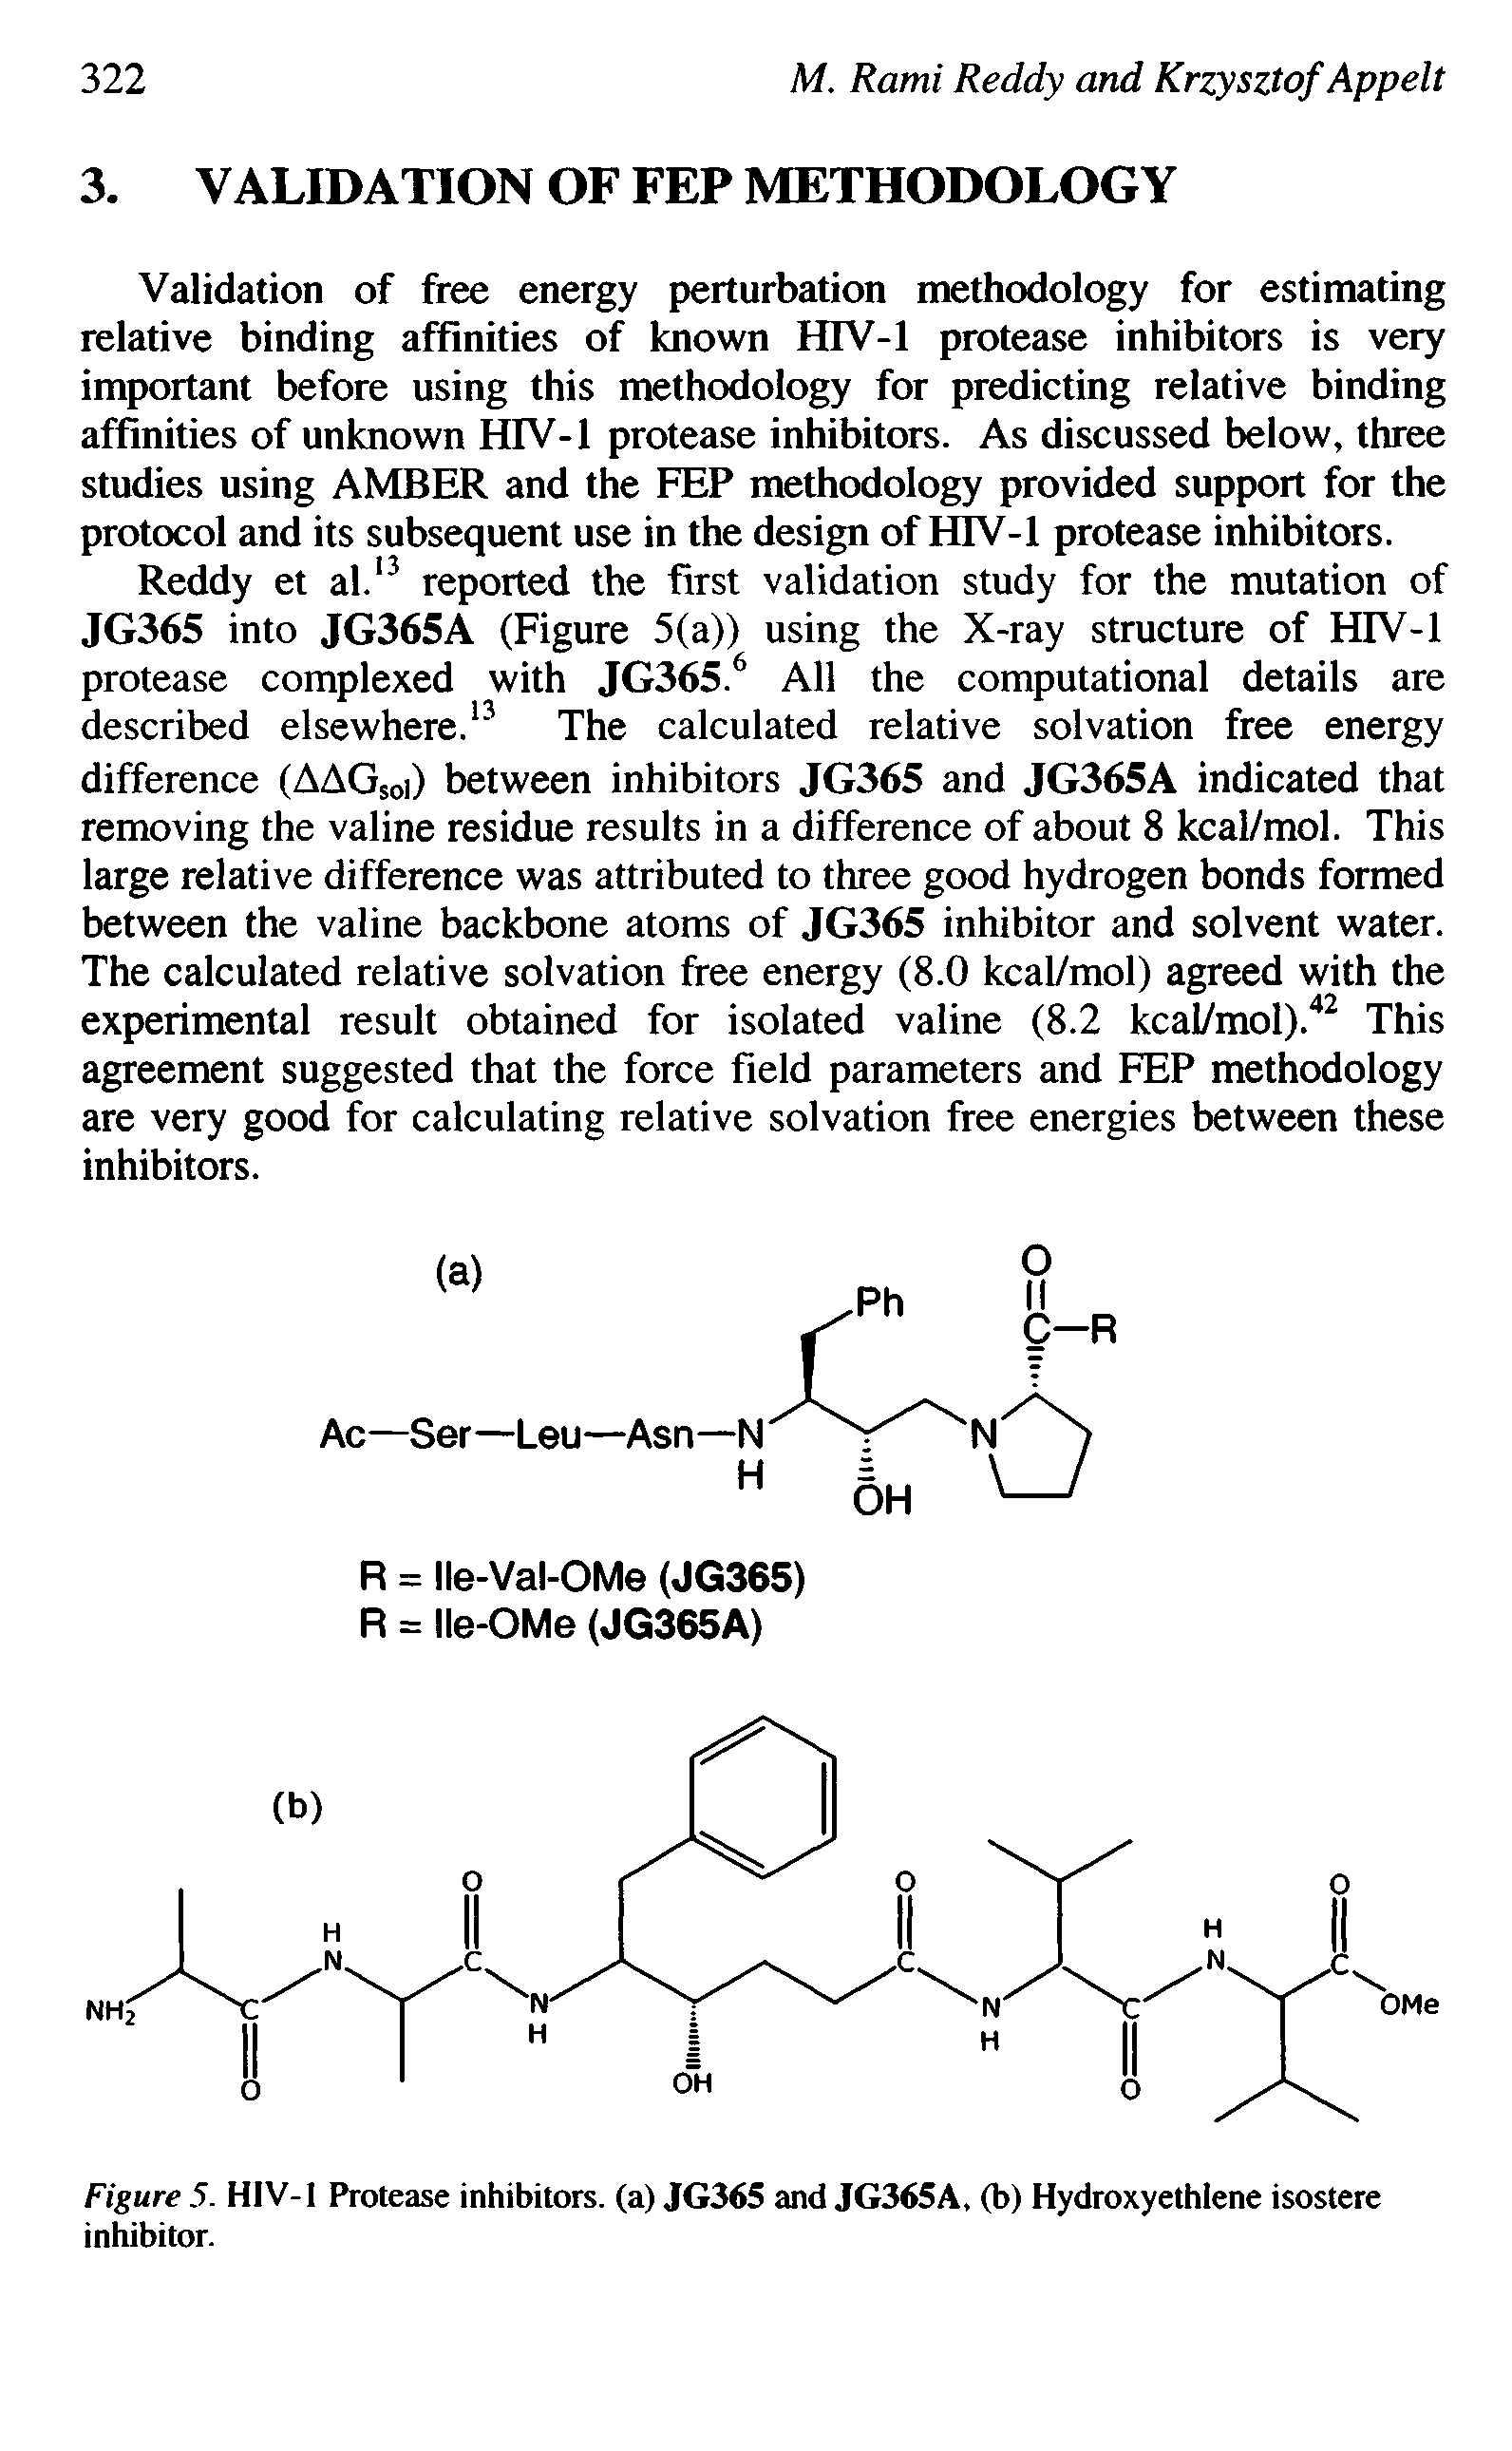 Figure 5. HIV-1 Protease inhibitors, (a) JG365 and JG365A, (b) Hydroxyethlene isostere inhibitor.